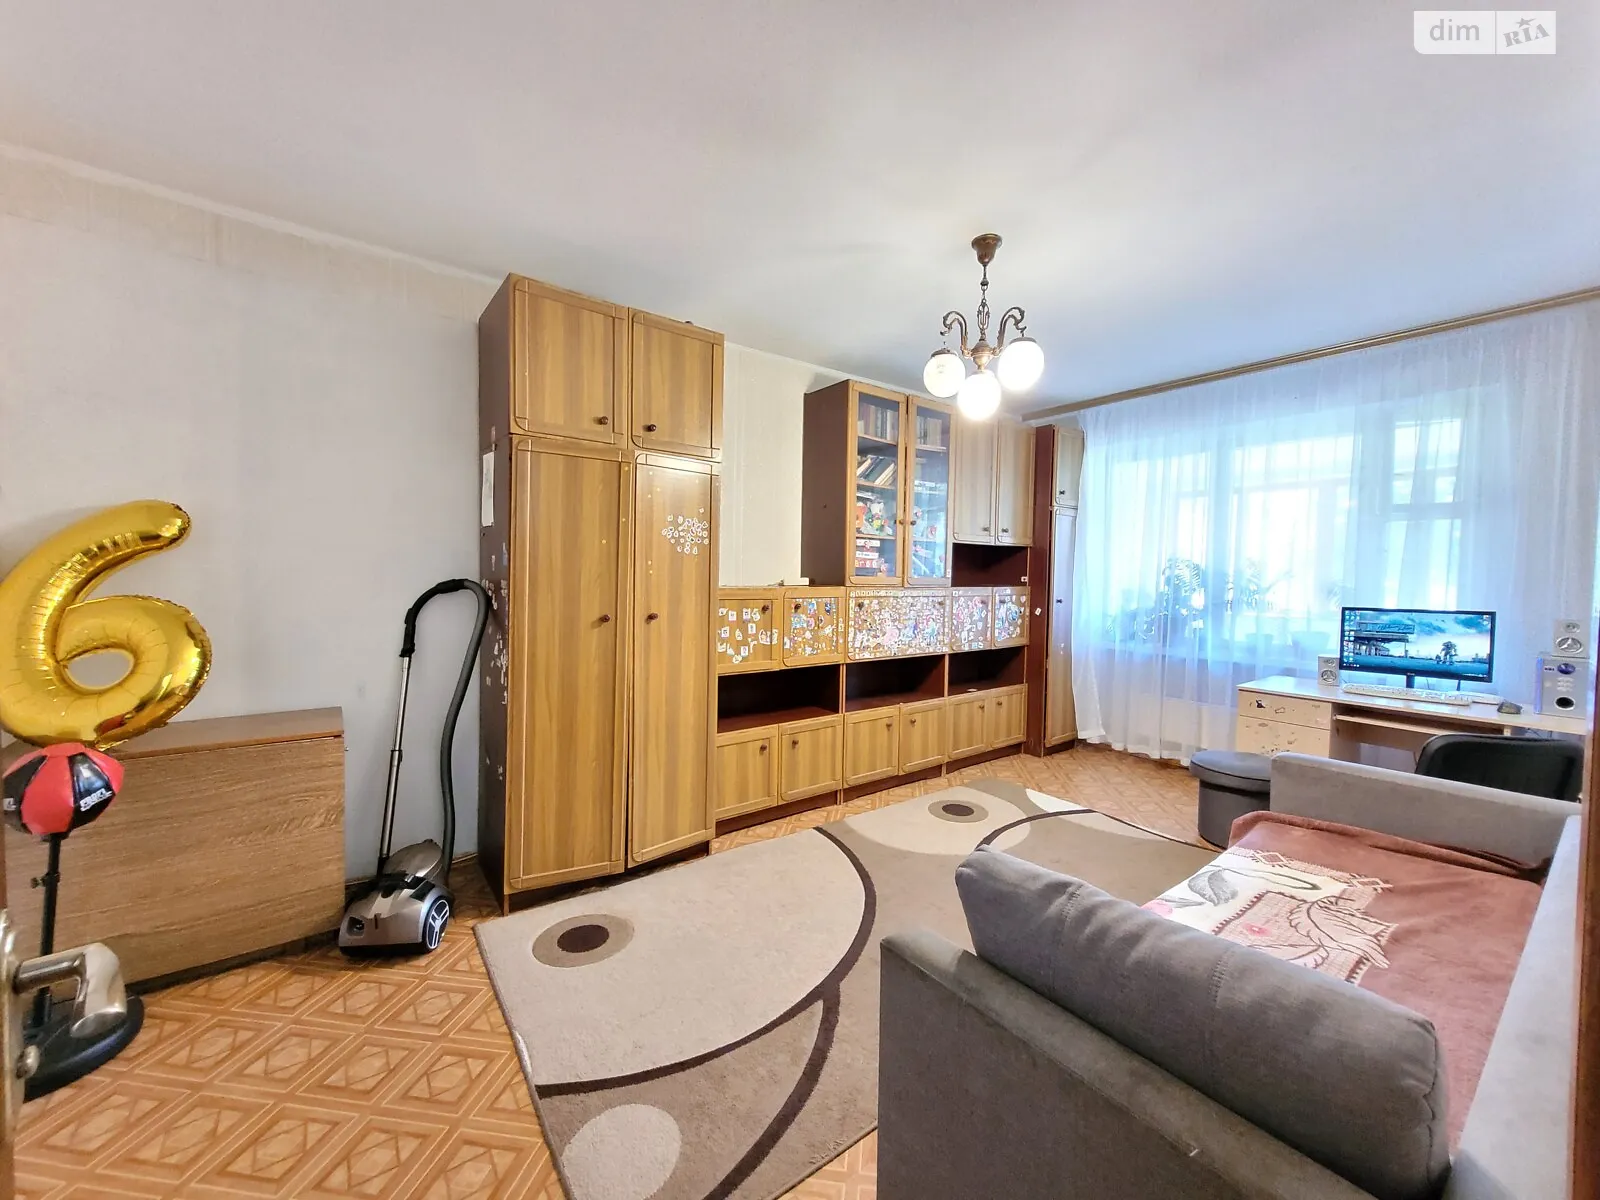 2-кімнатна квартира 50 кв. м у Луцьку, цена: 50000 $